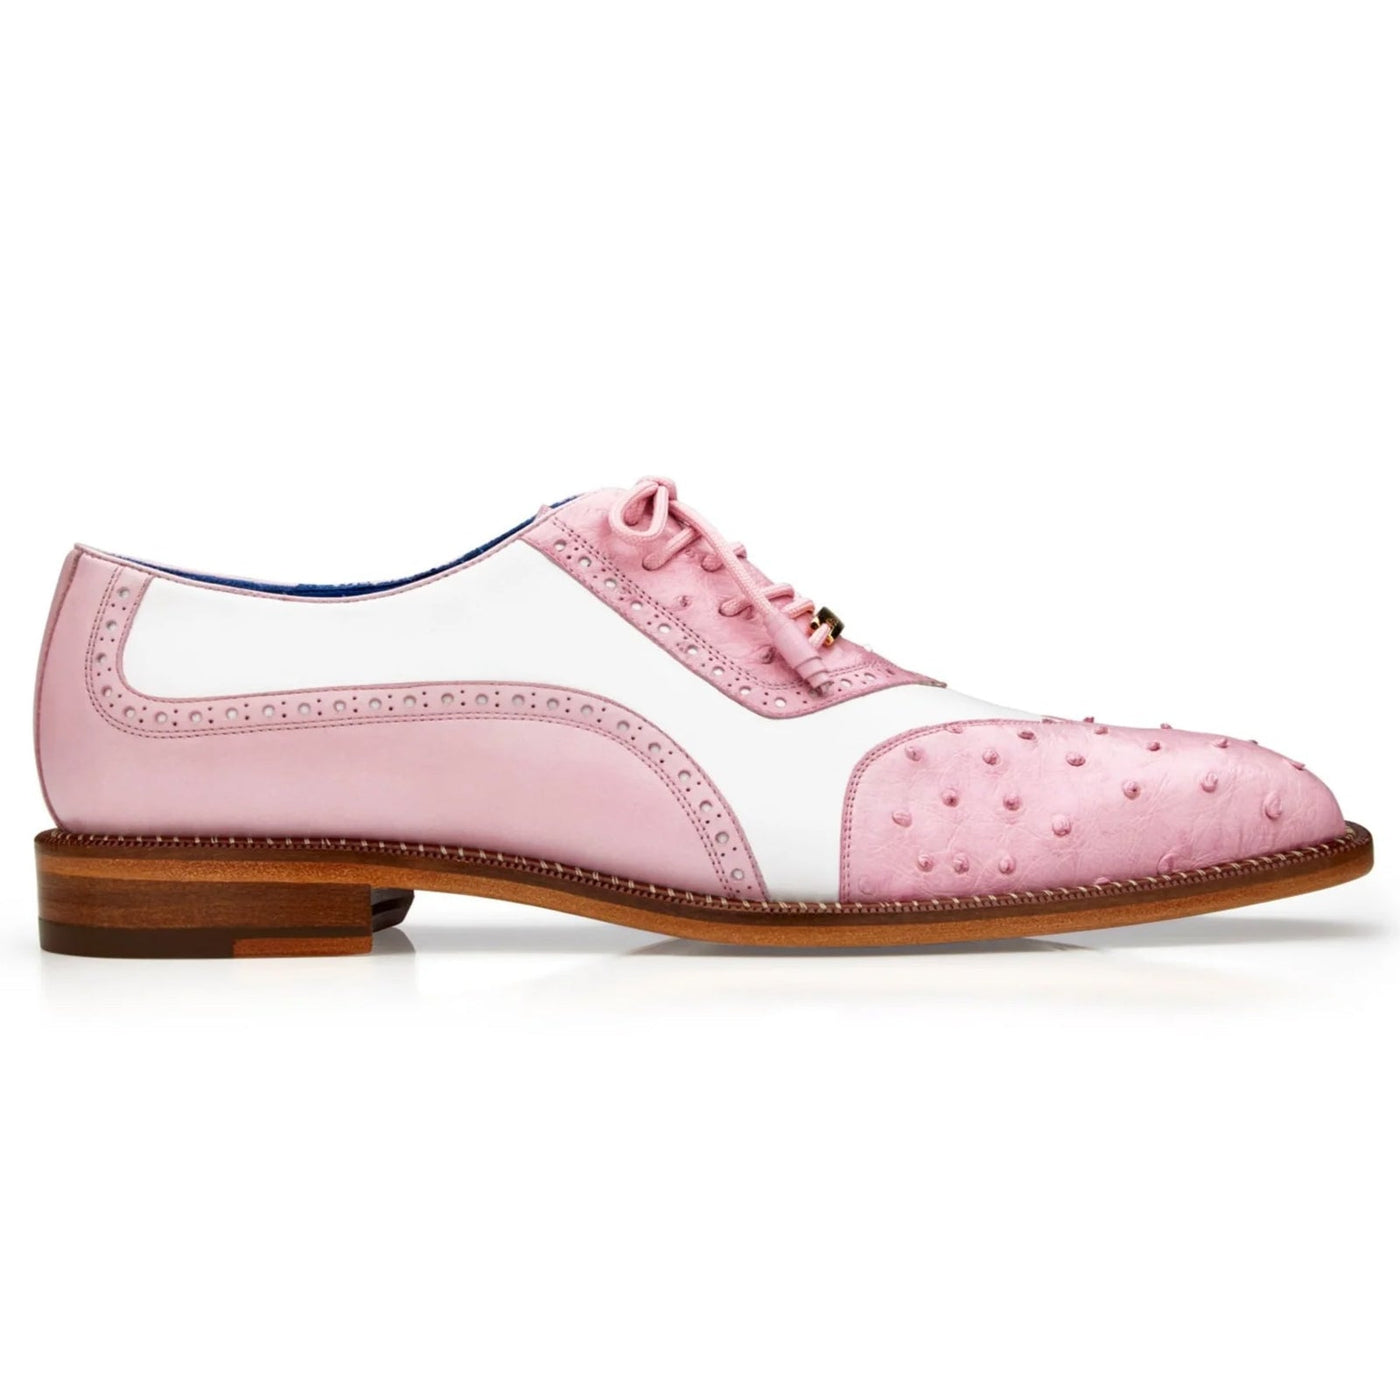 Men's Belvedere Sesto Italian Calf & Ostrich Quill Wingtip Dress Shoe in Pink & White